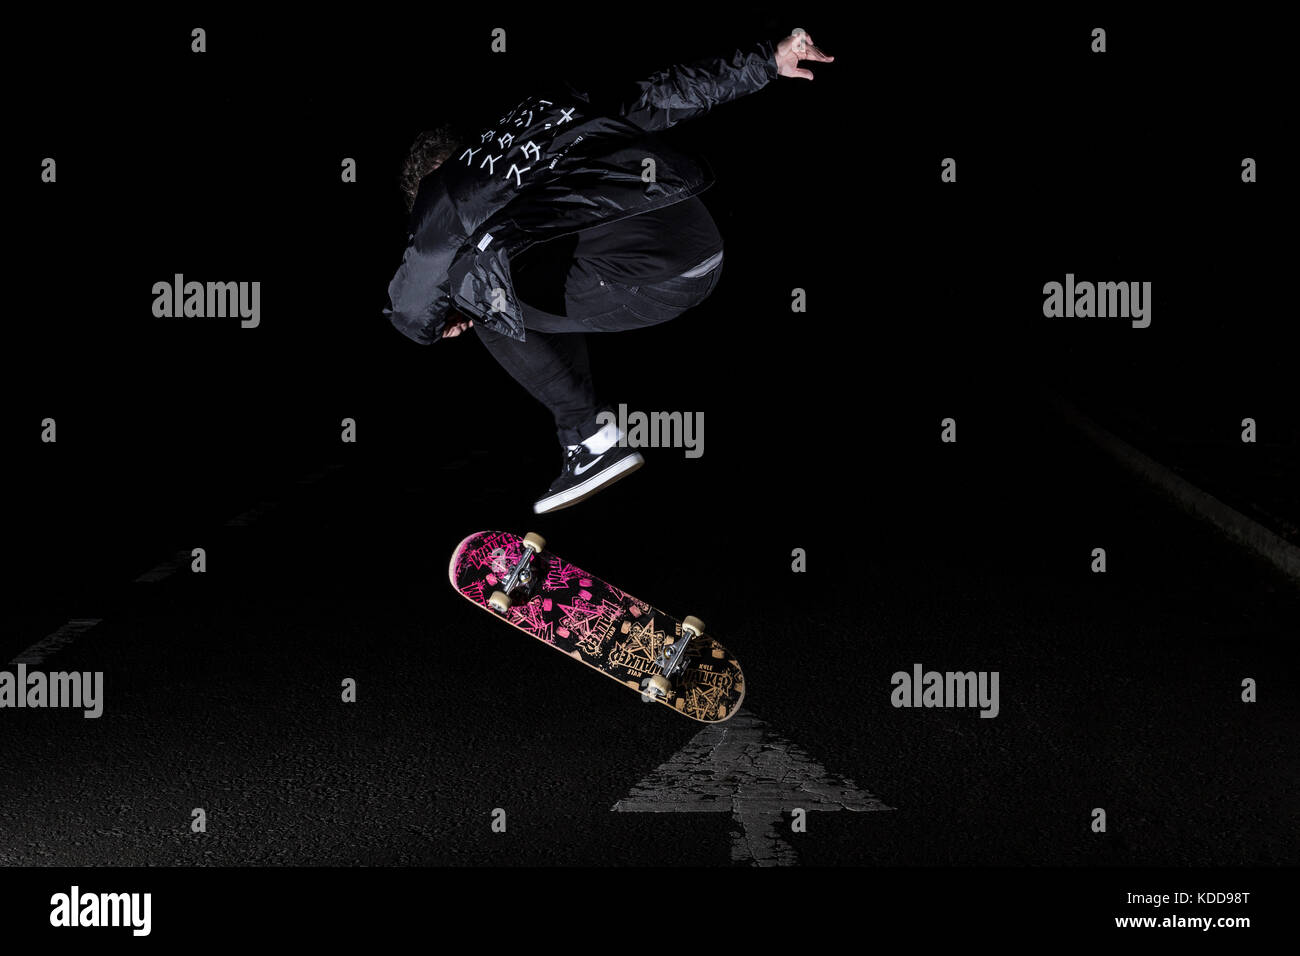 Night time skate Stock Photo